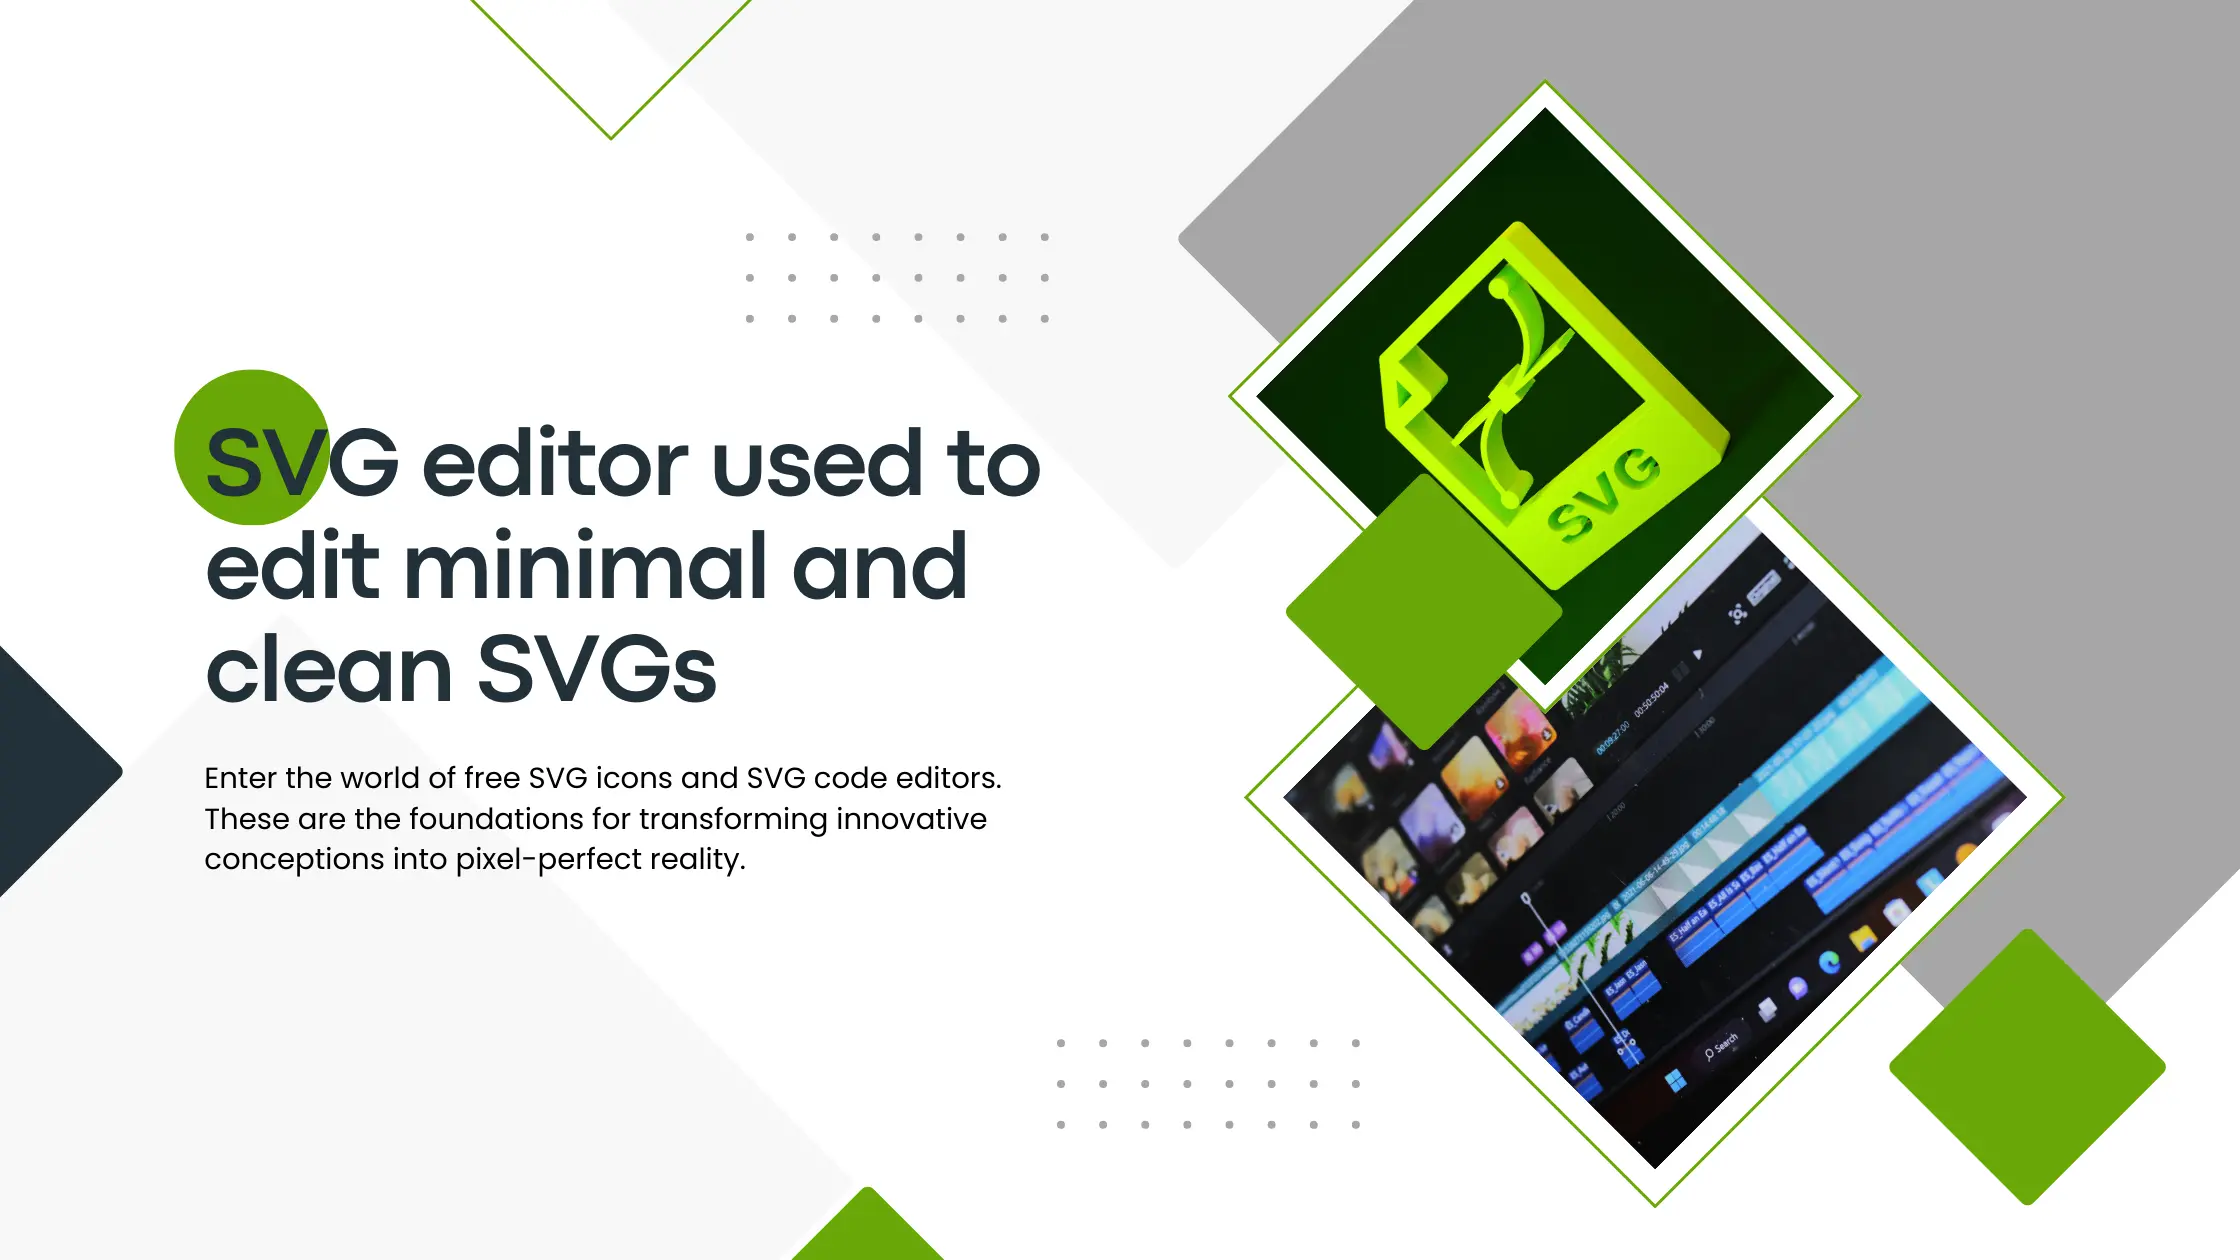 SVG editor